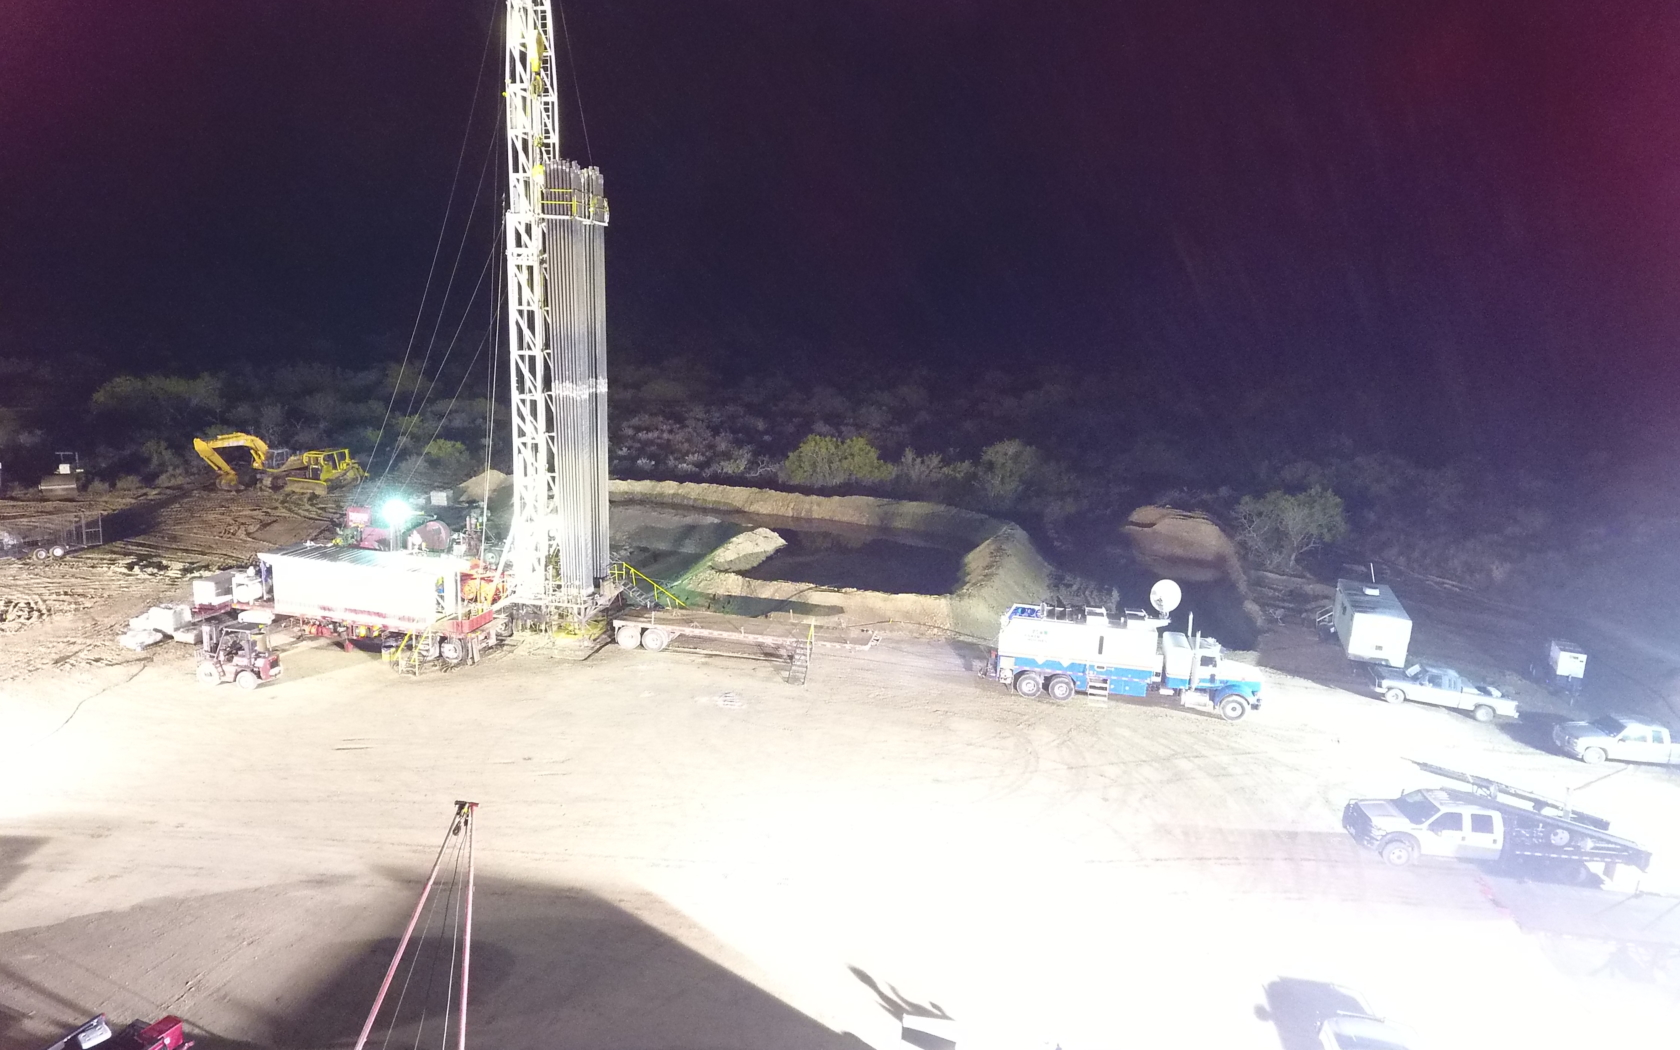 Everest Resource Company Progress Drilling R#3 Night